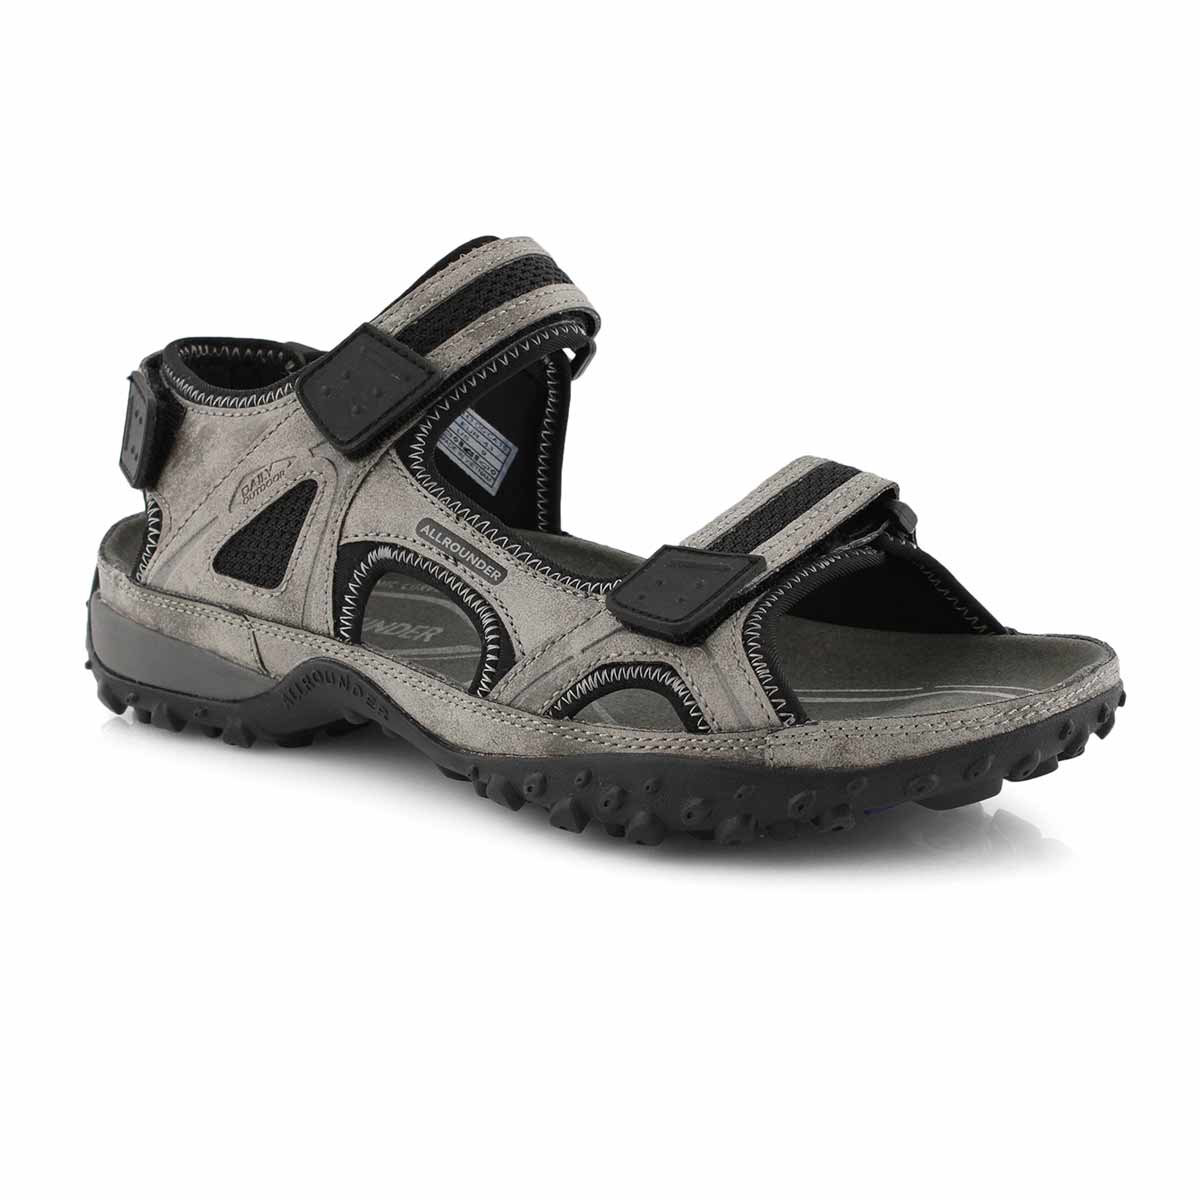 softmoc mephisto sandals - 52% OFF 